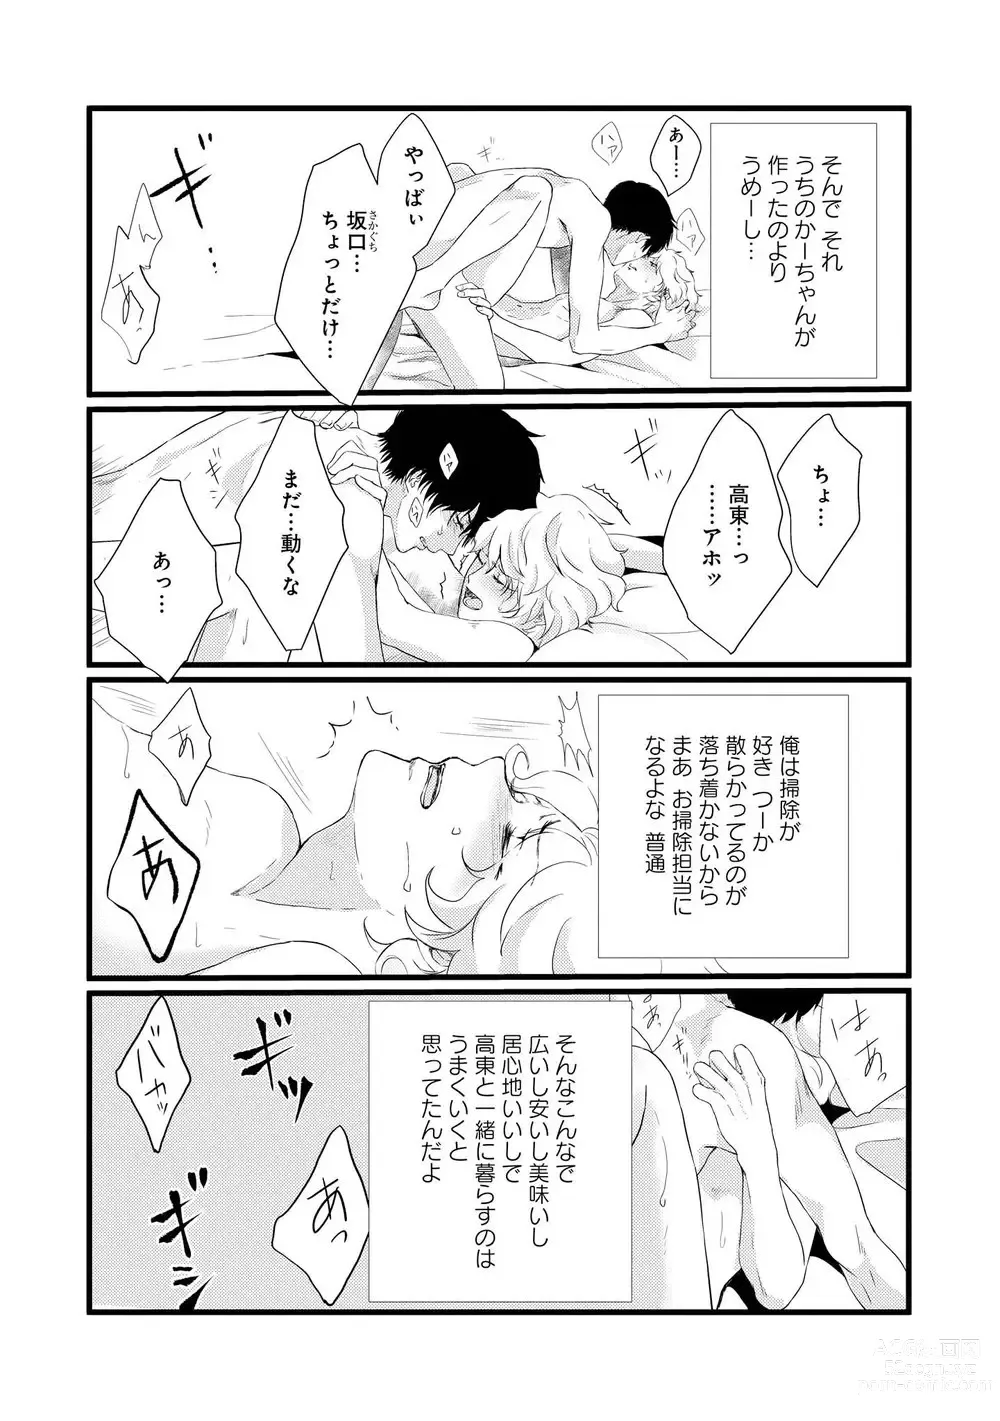 Page 7 of manga AHOERO